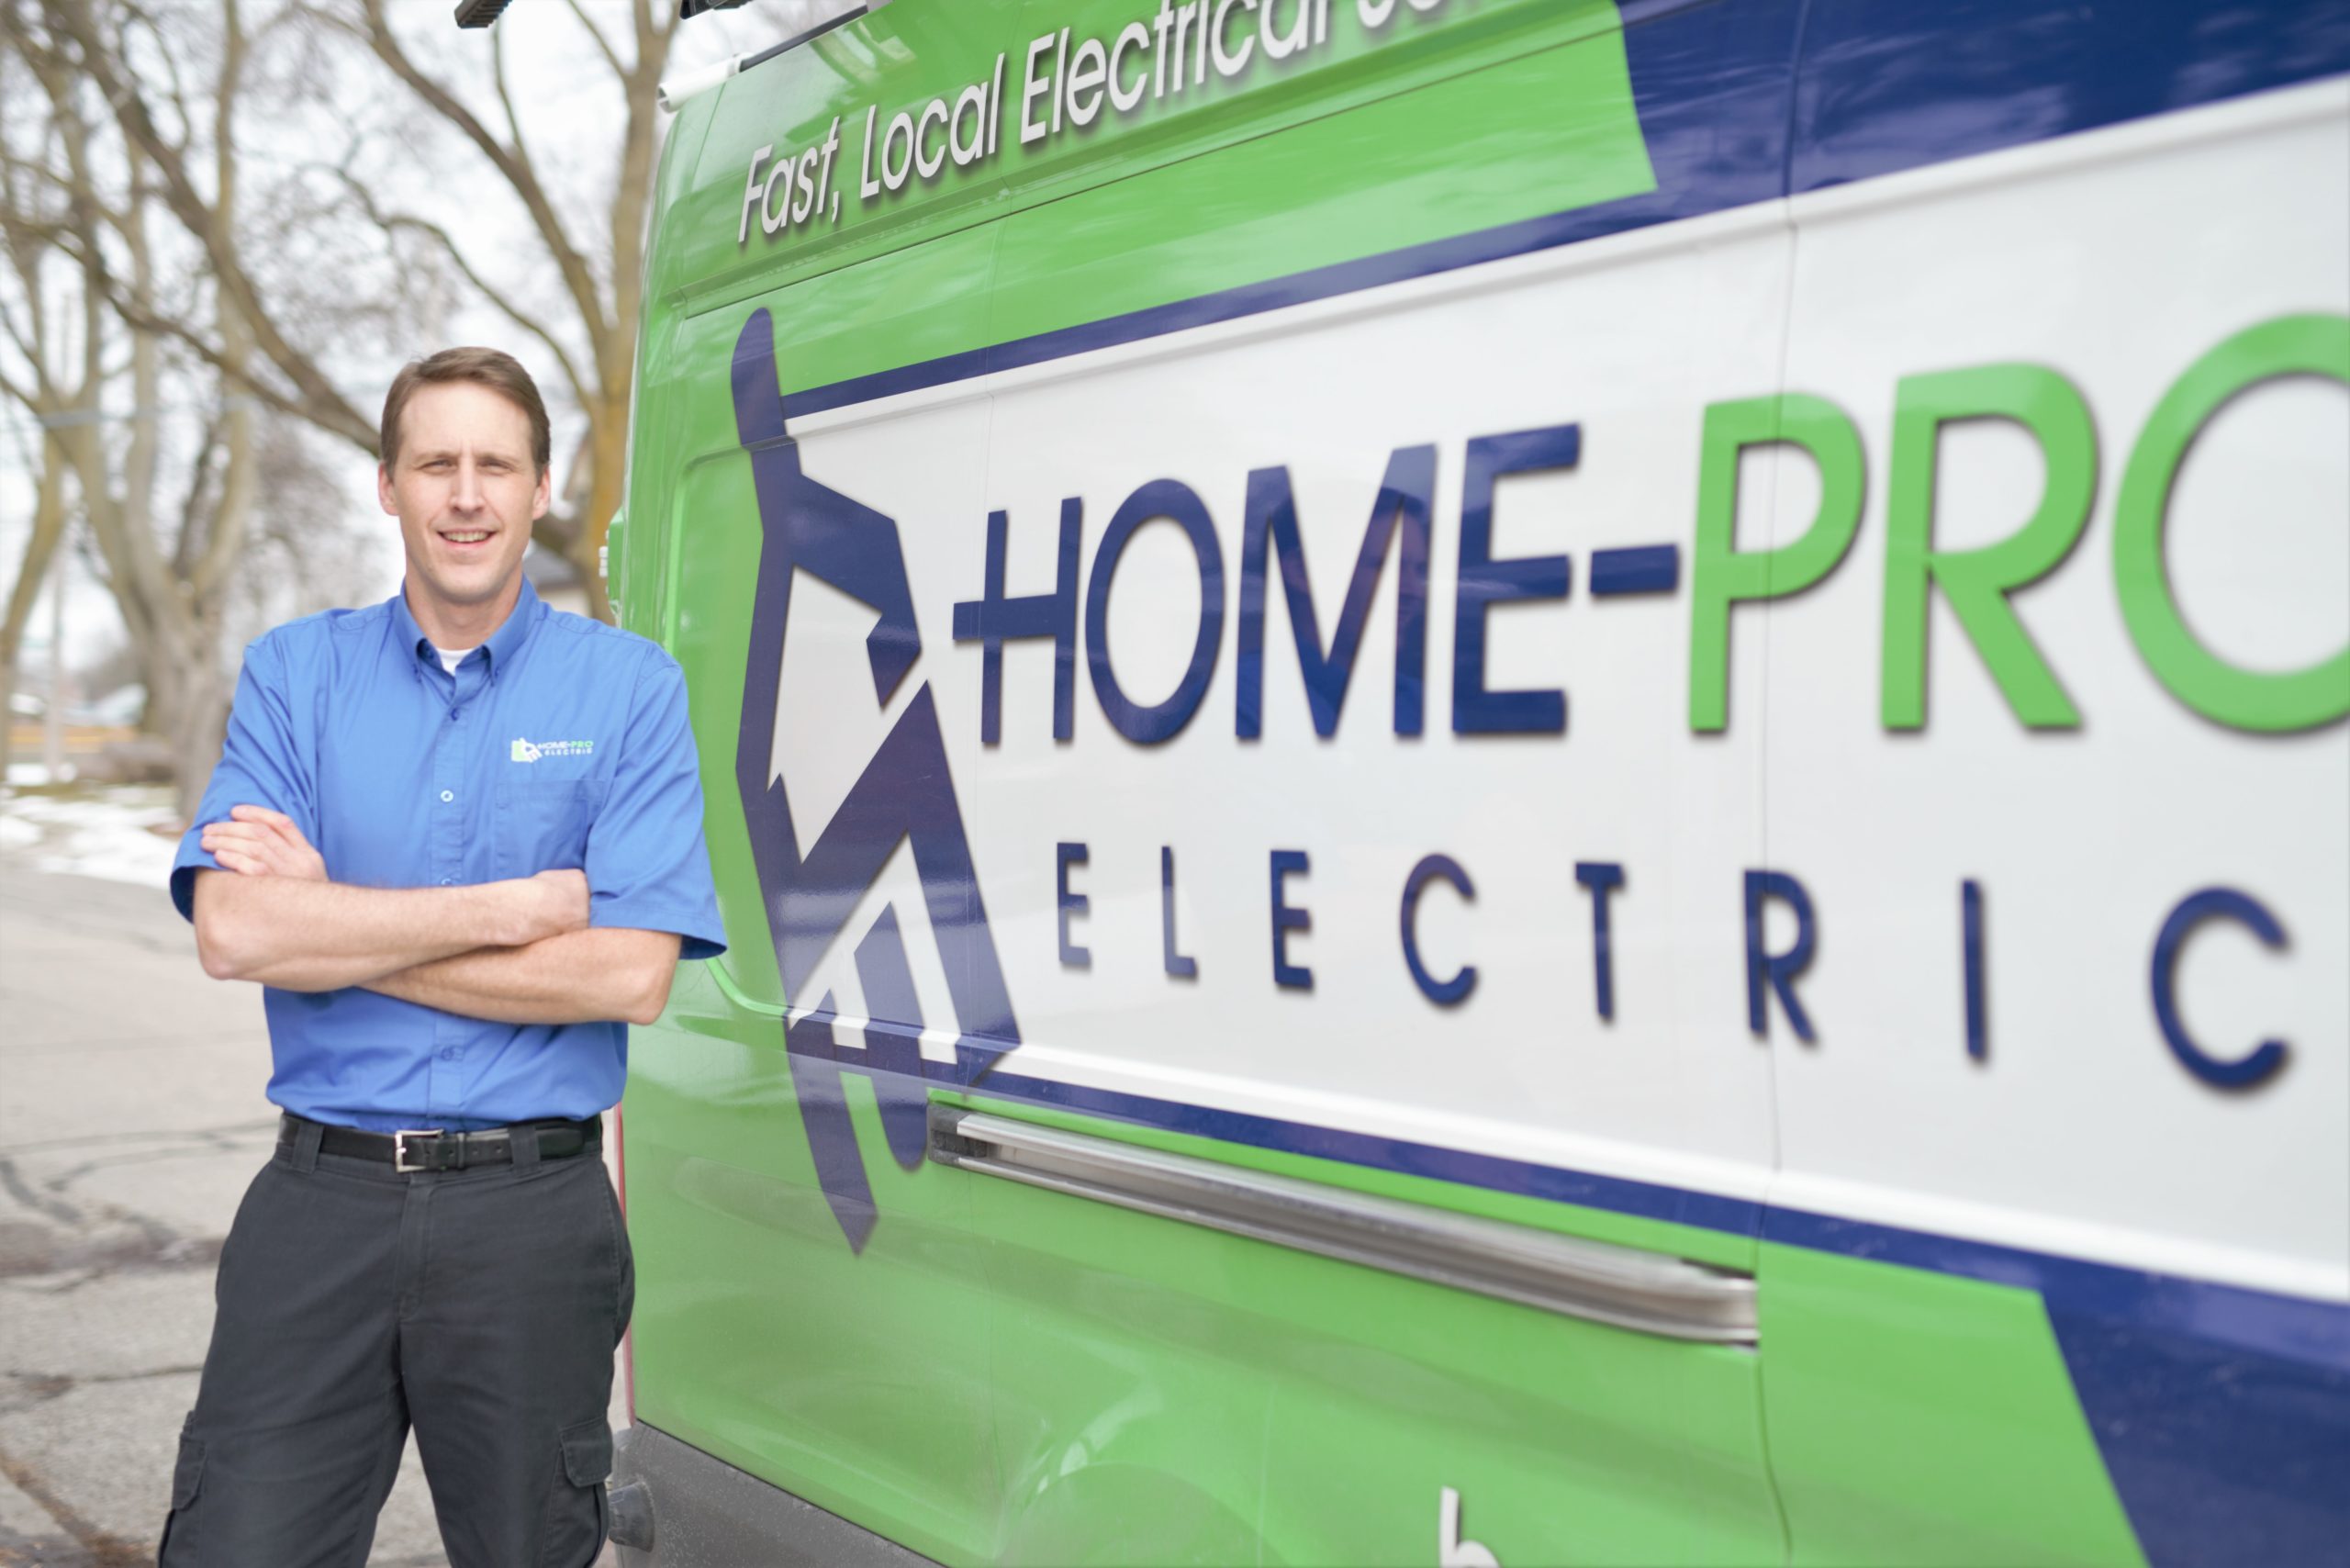 Tim Home-Pro Electric